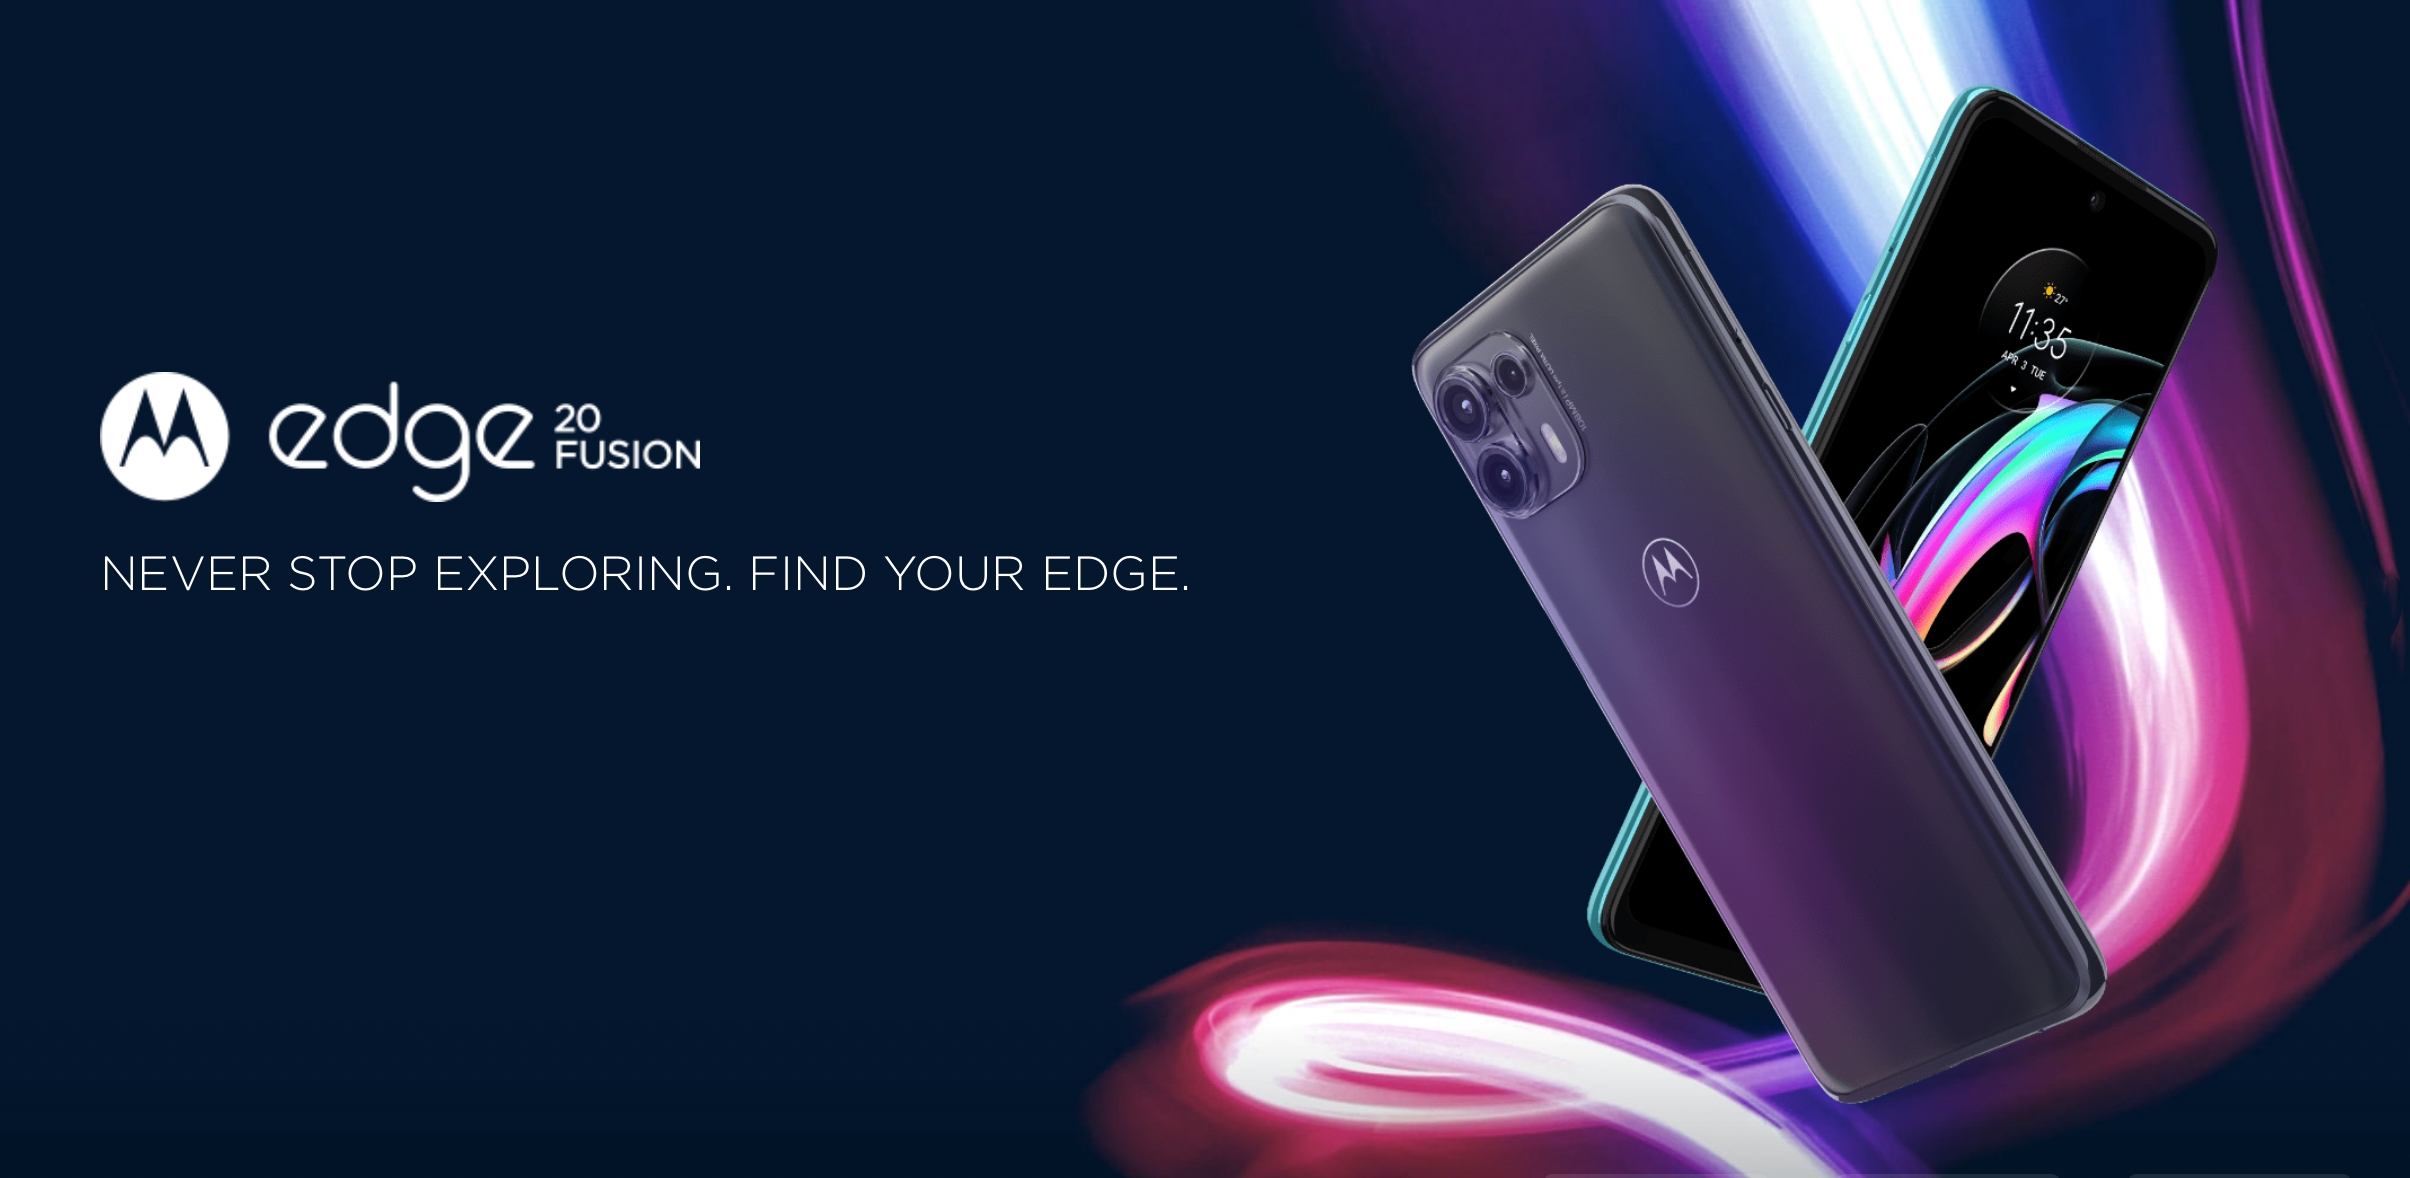 Motorola Edge 20 Fusion: 90Hz OLED display, MediaTek Dimensity 800U chip, 108 MP camera, IP52 protection and price tag from $290